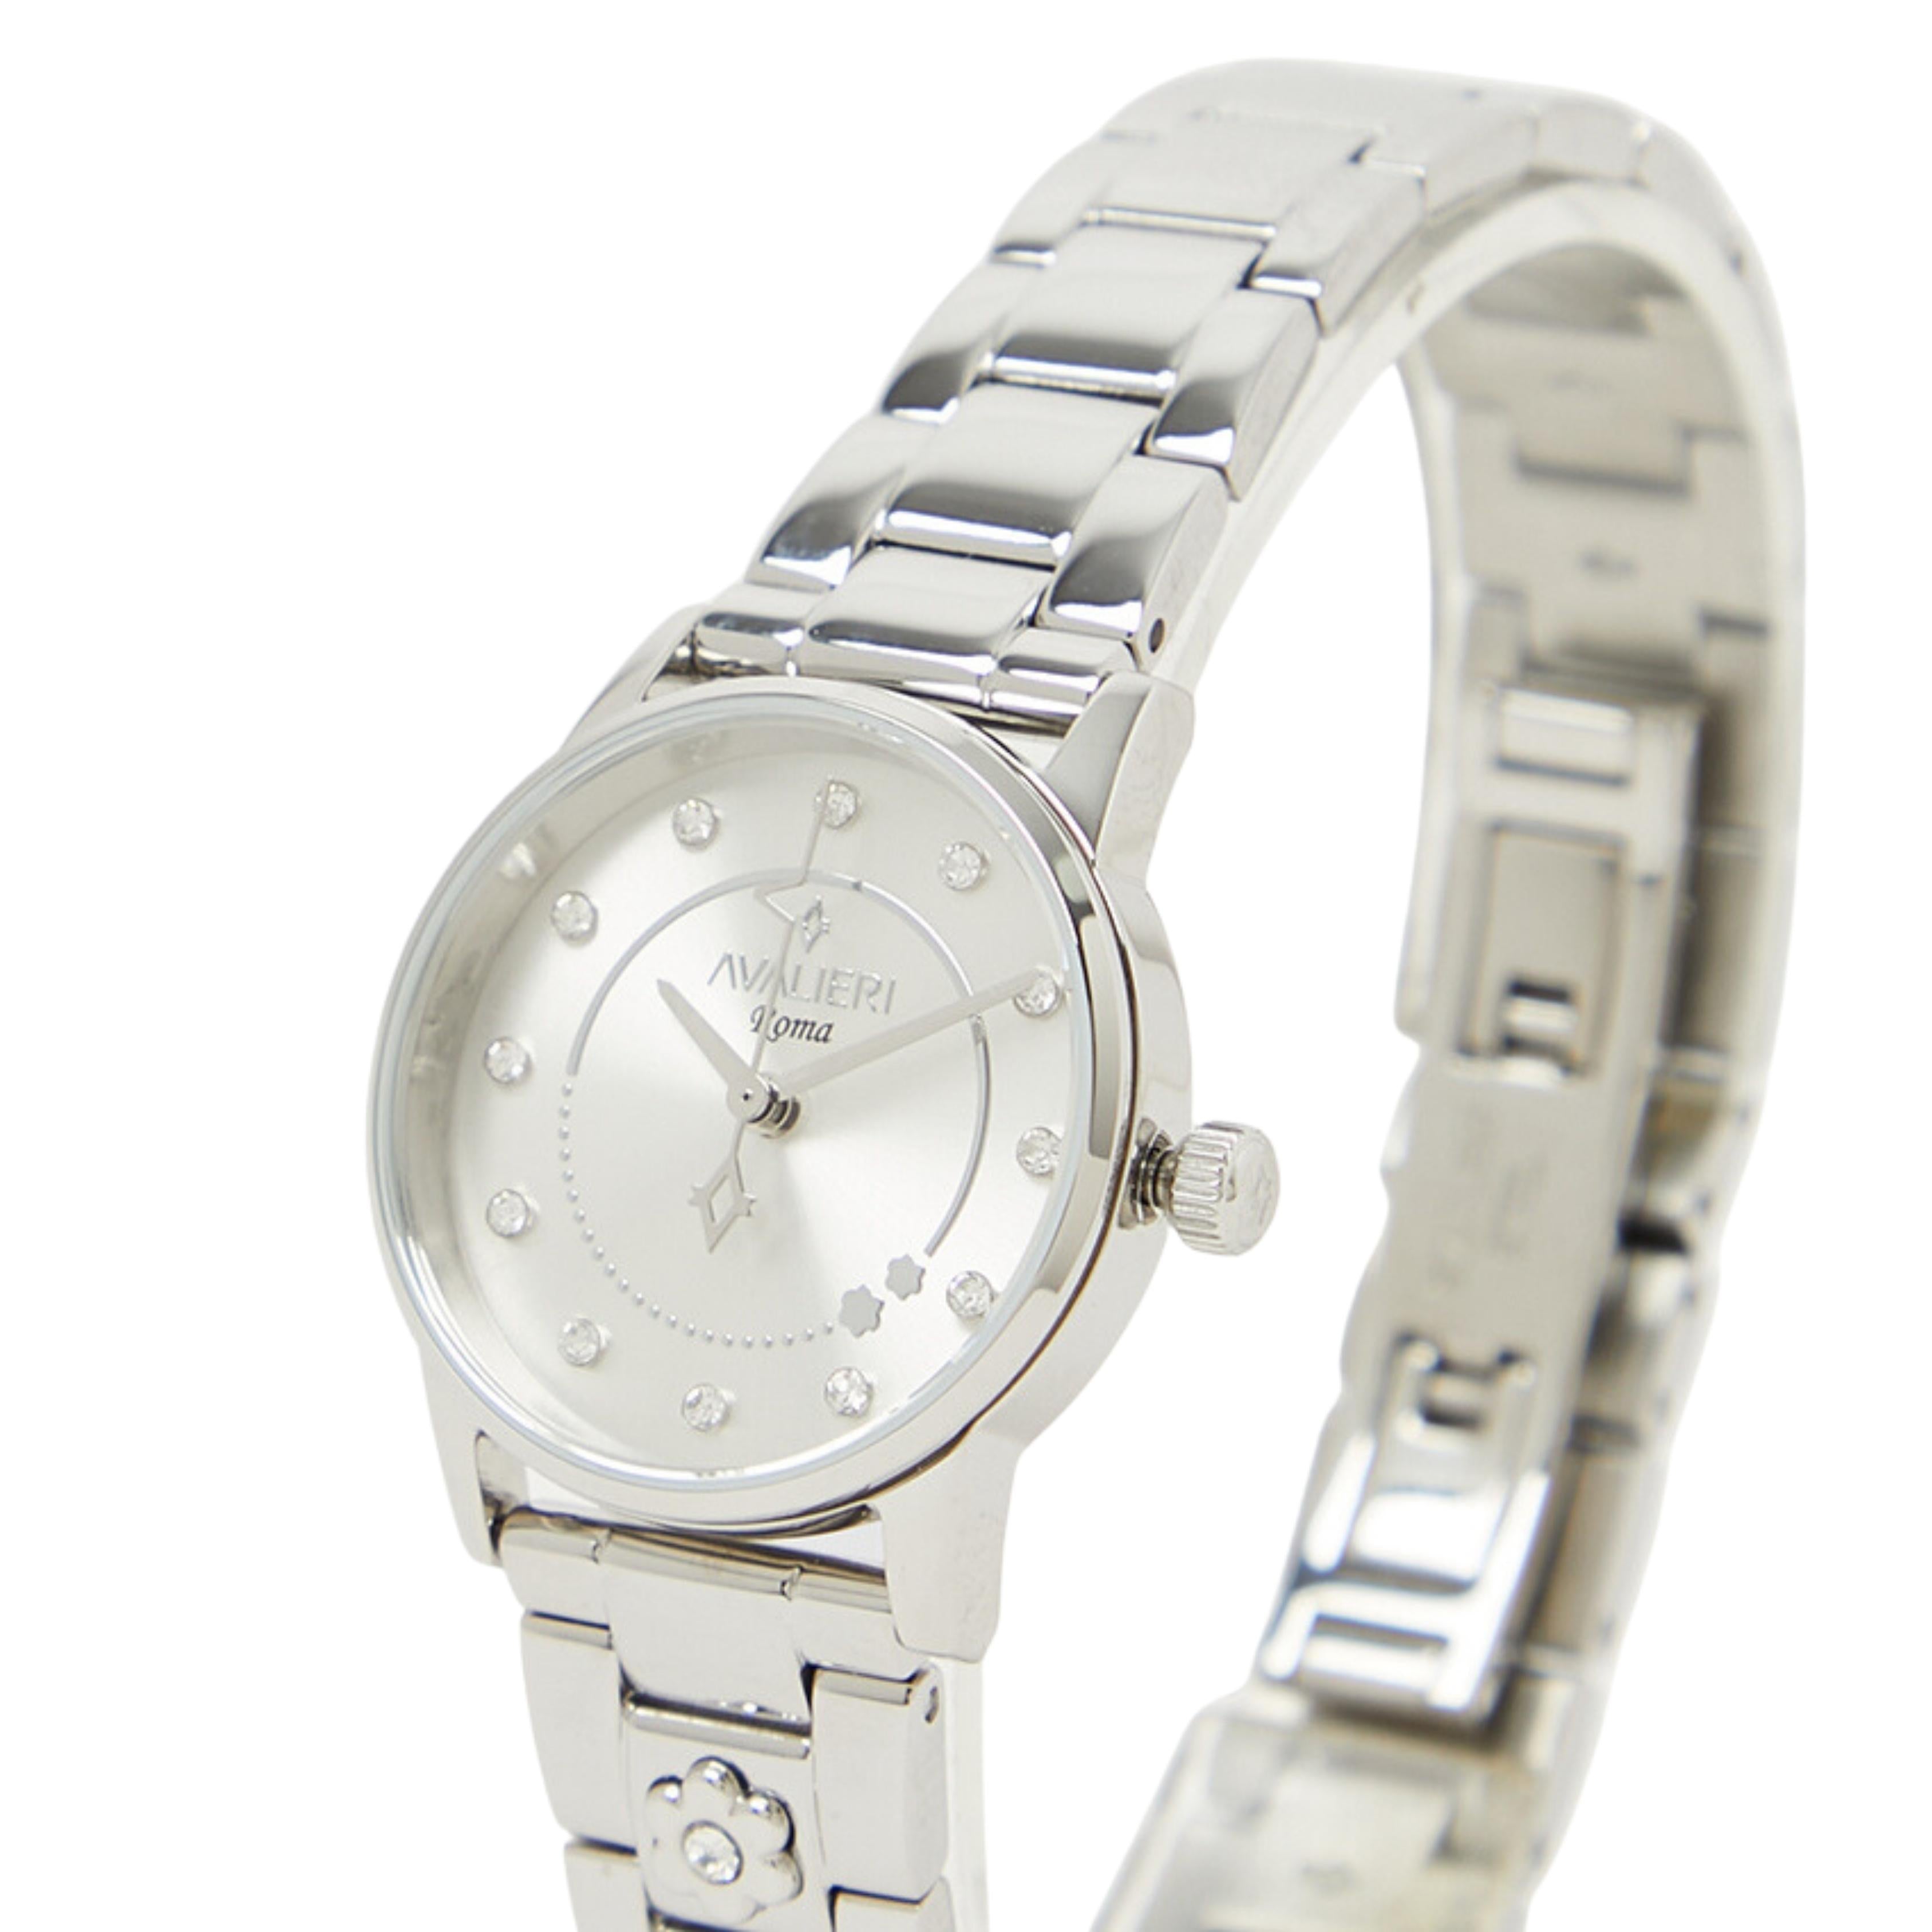 Avalieri Women's Silver White Dial Quartz Movement Watch Set - AV-2595B+BR